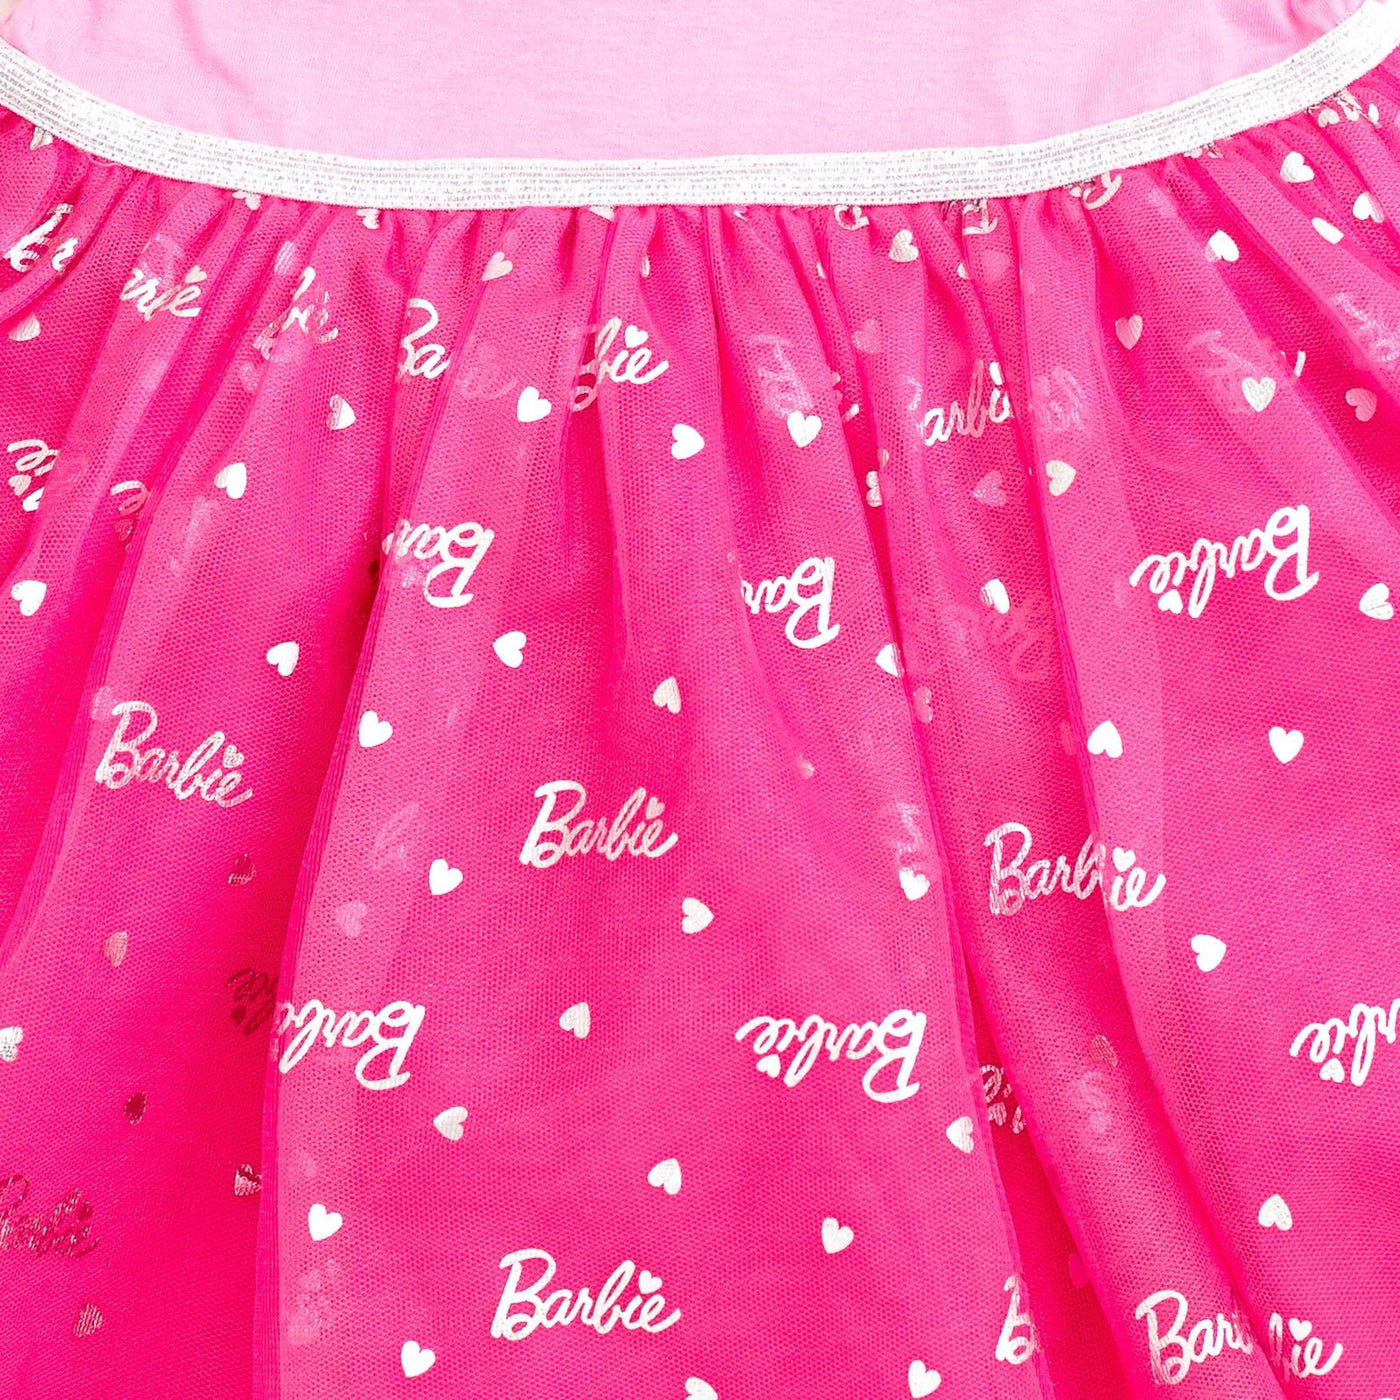 Barbie Tulle Dress - imagikids